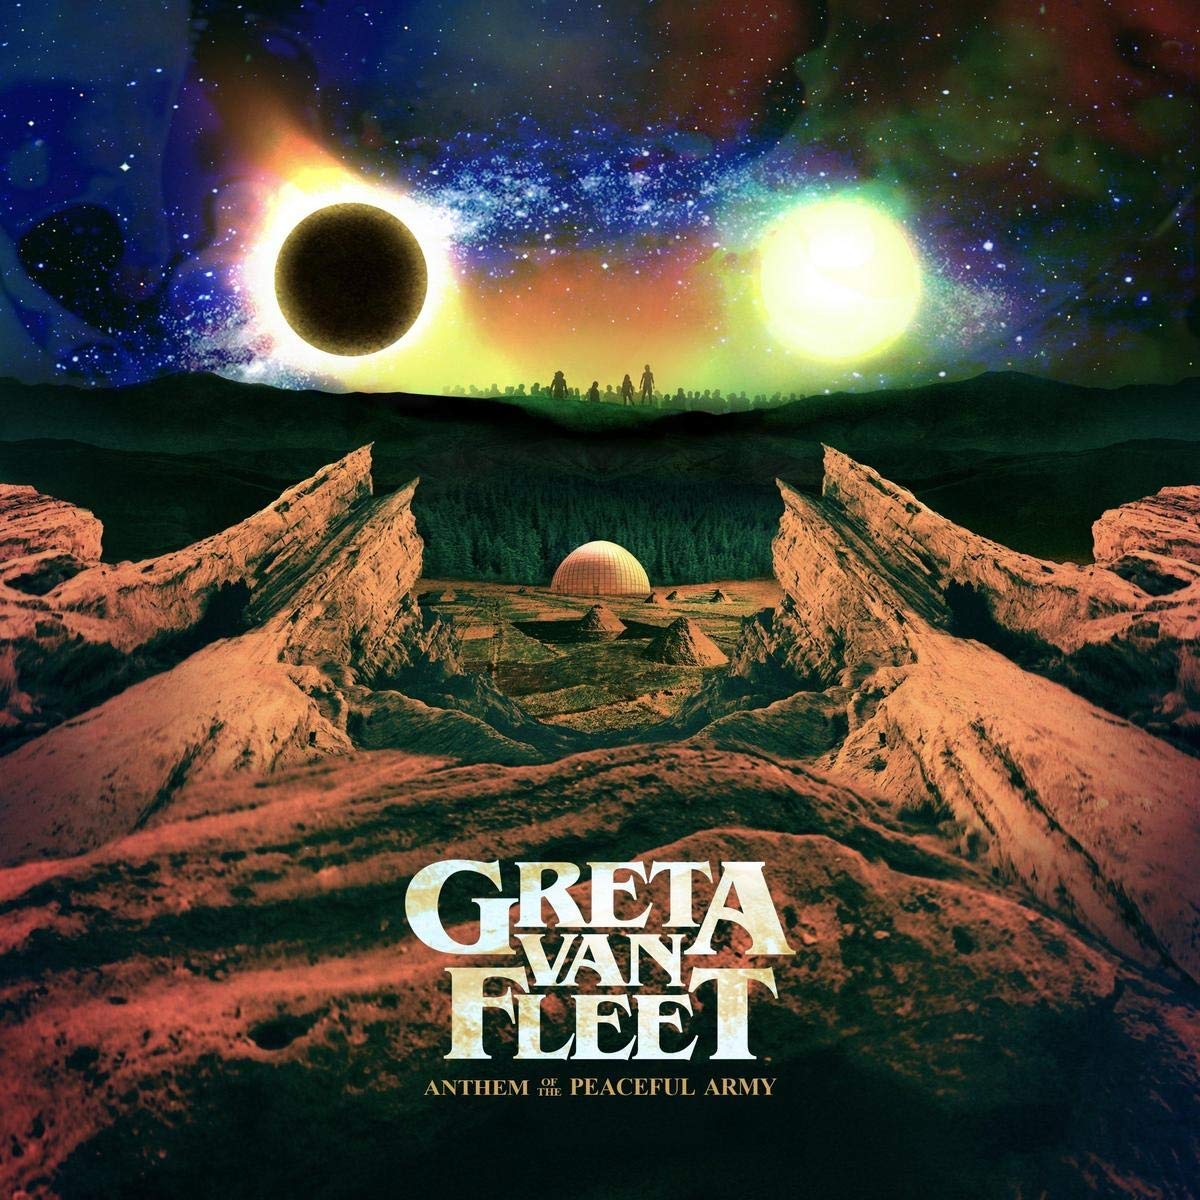 Album to listen: Greta Van Fleet’s  ‘Anthem of the Peaceful Army’